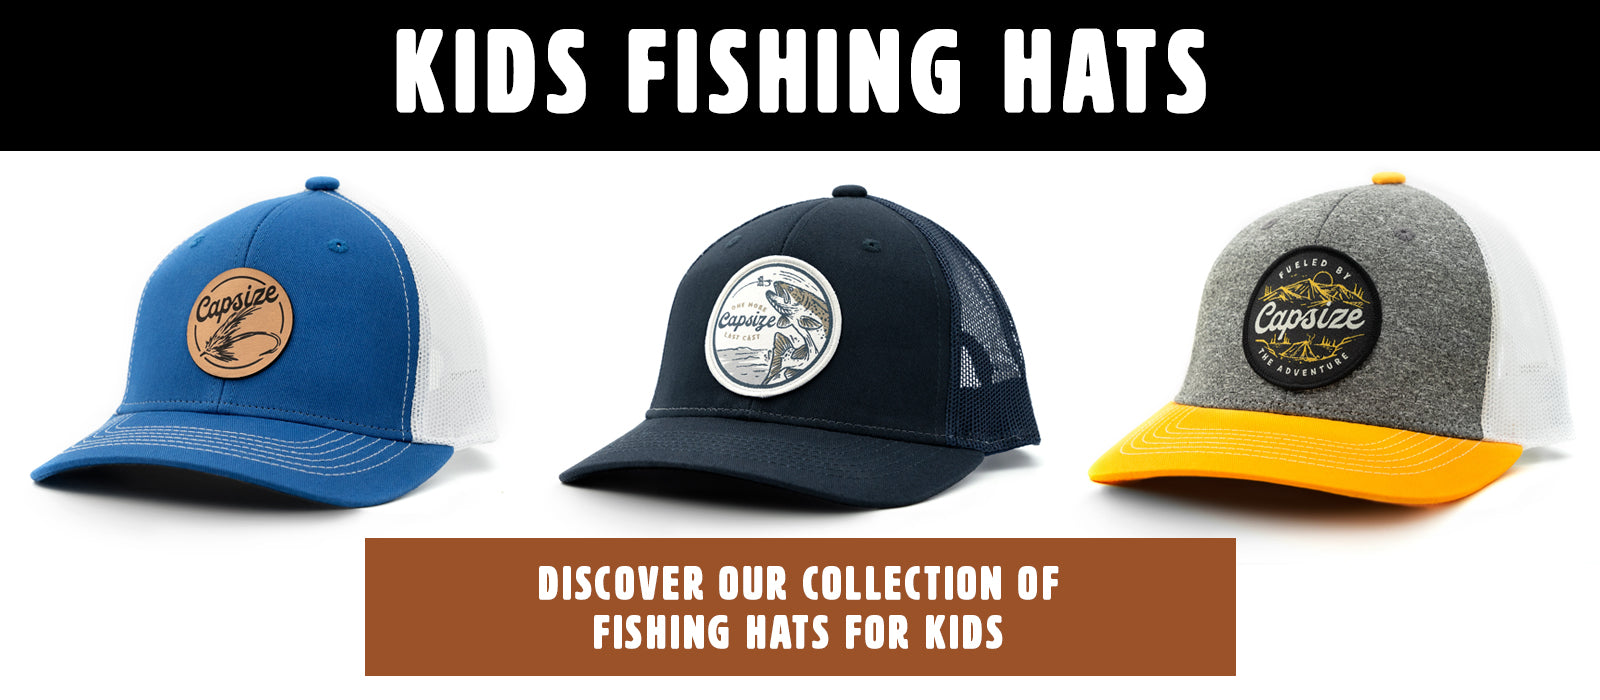 Kids fishing hats